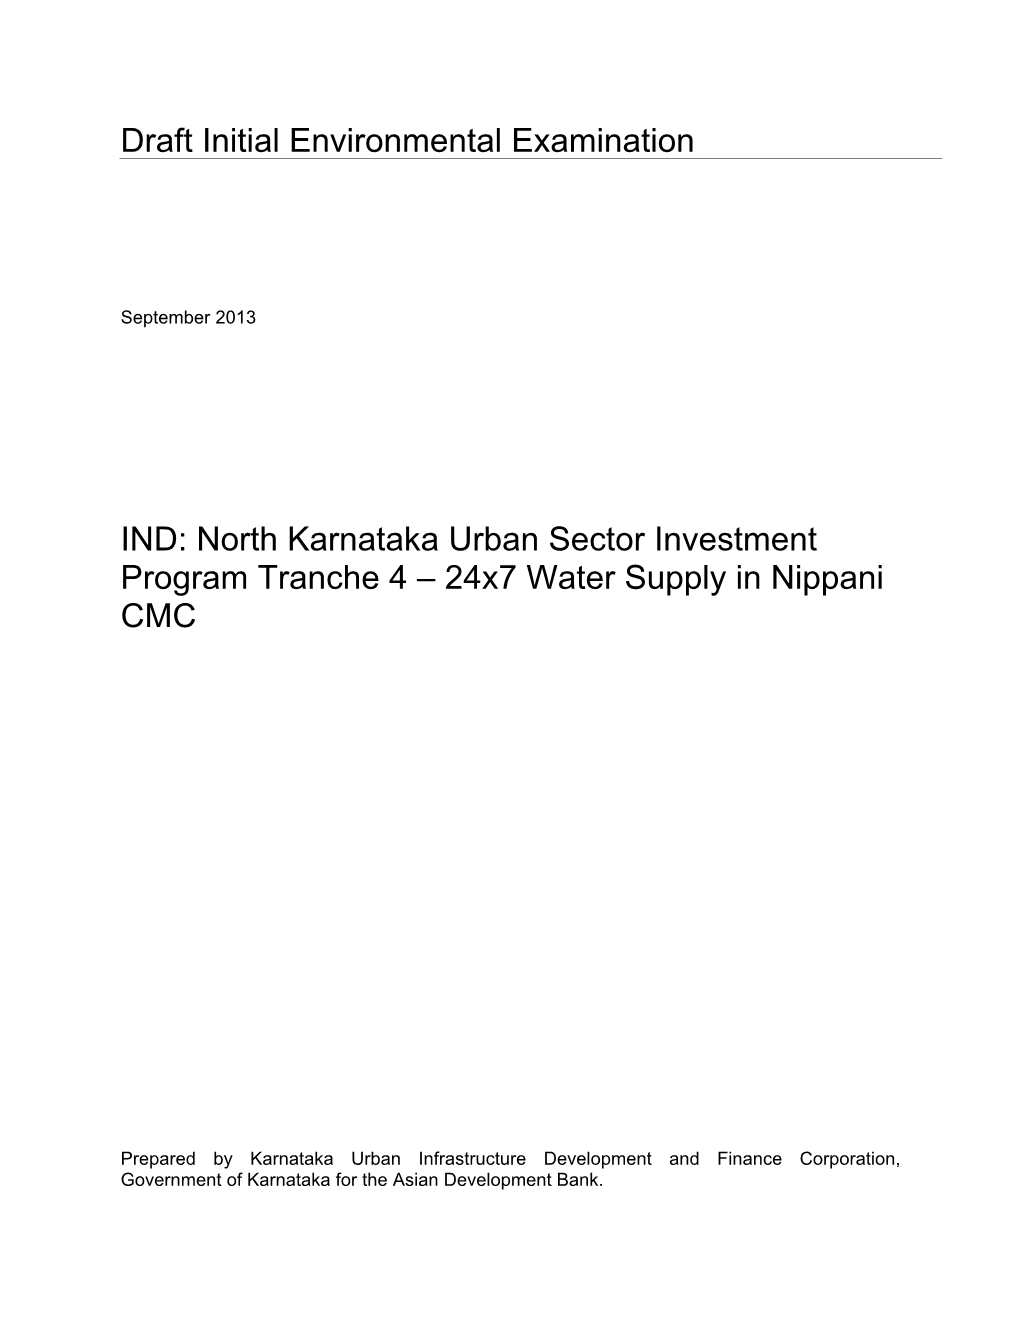 North Karnataka Urban Sector Investment Program Tranche 4 – 24X7 Water Supply in Nippani CMC